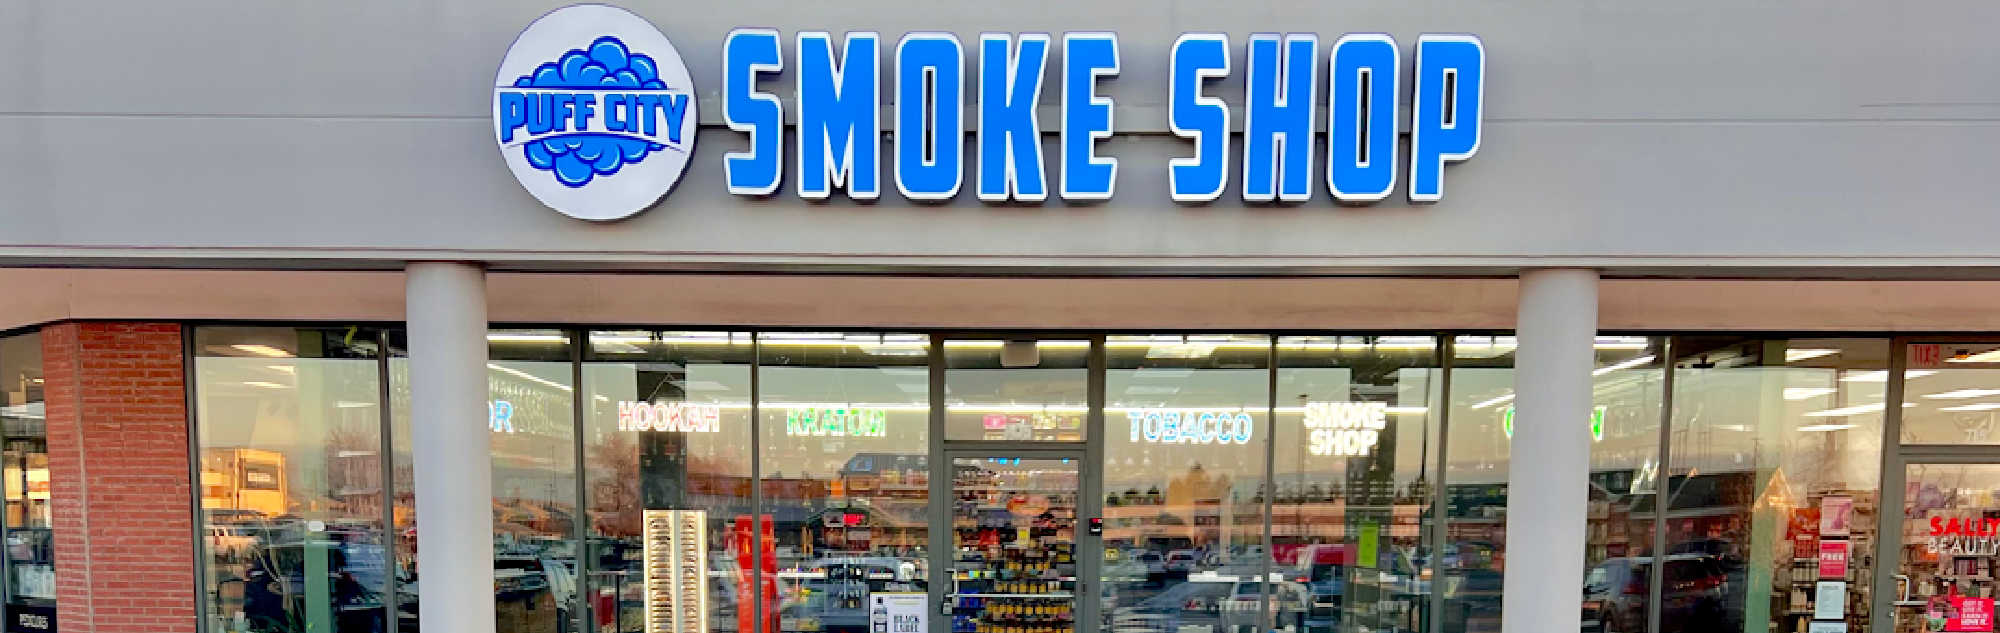 image of puffcity smoke shop & vape shop